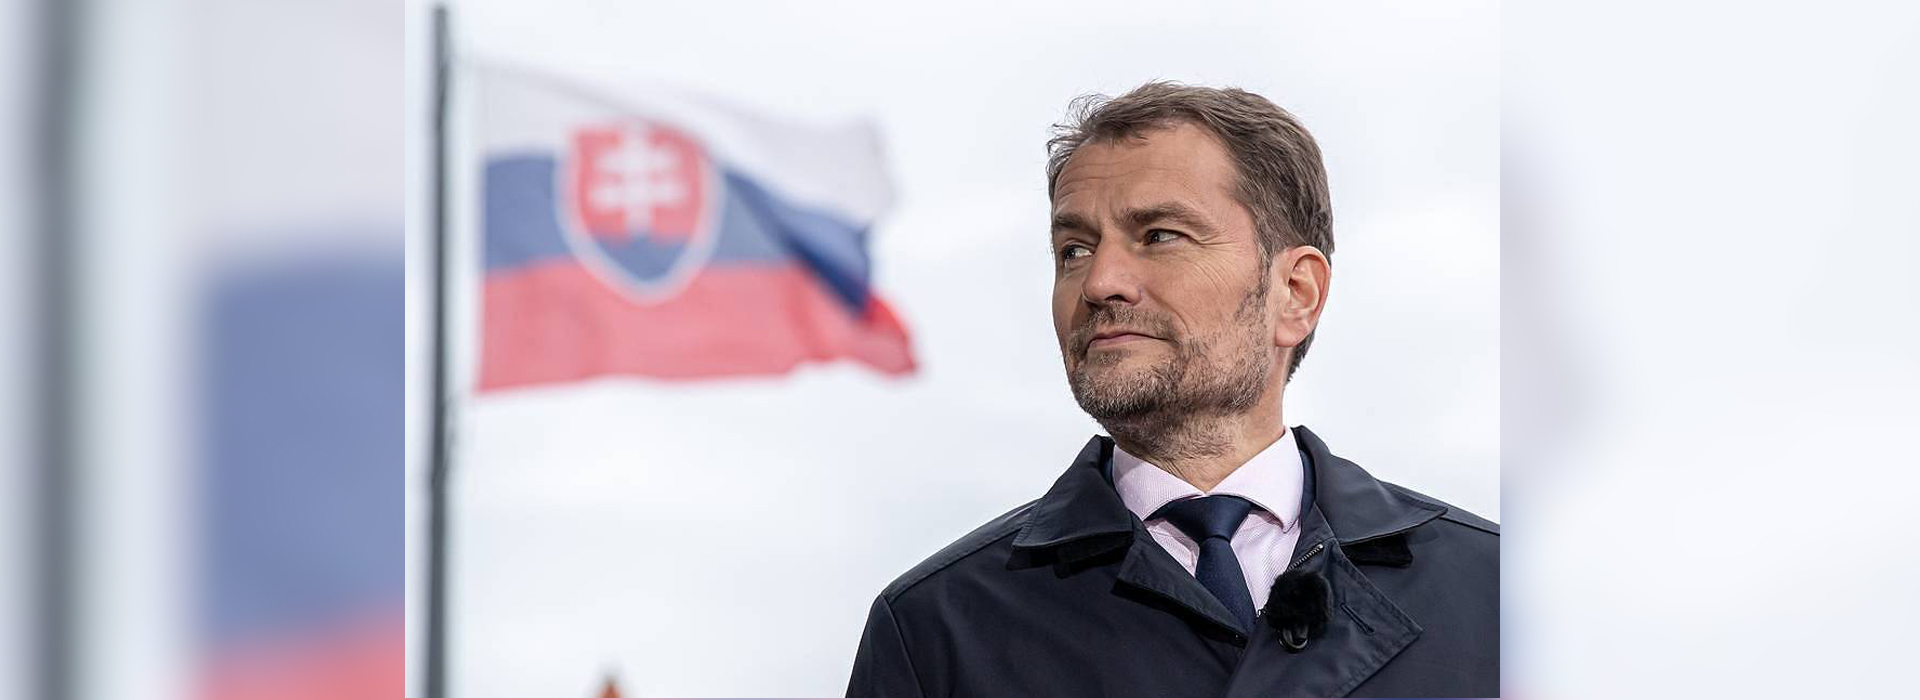 Coalition Crisis in Slovakia